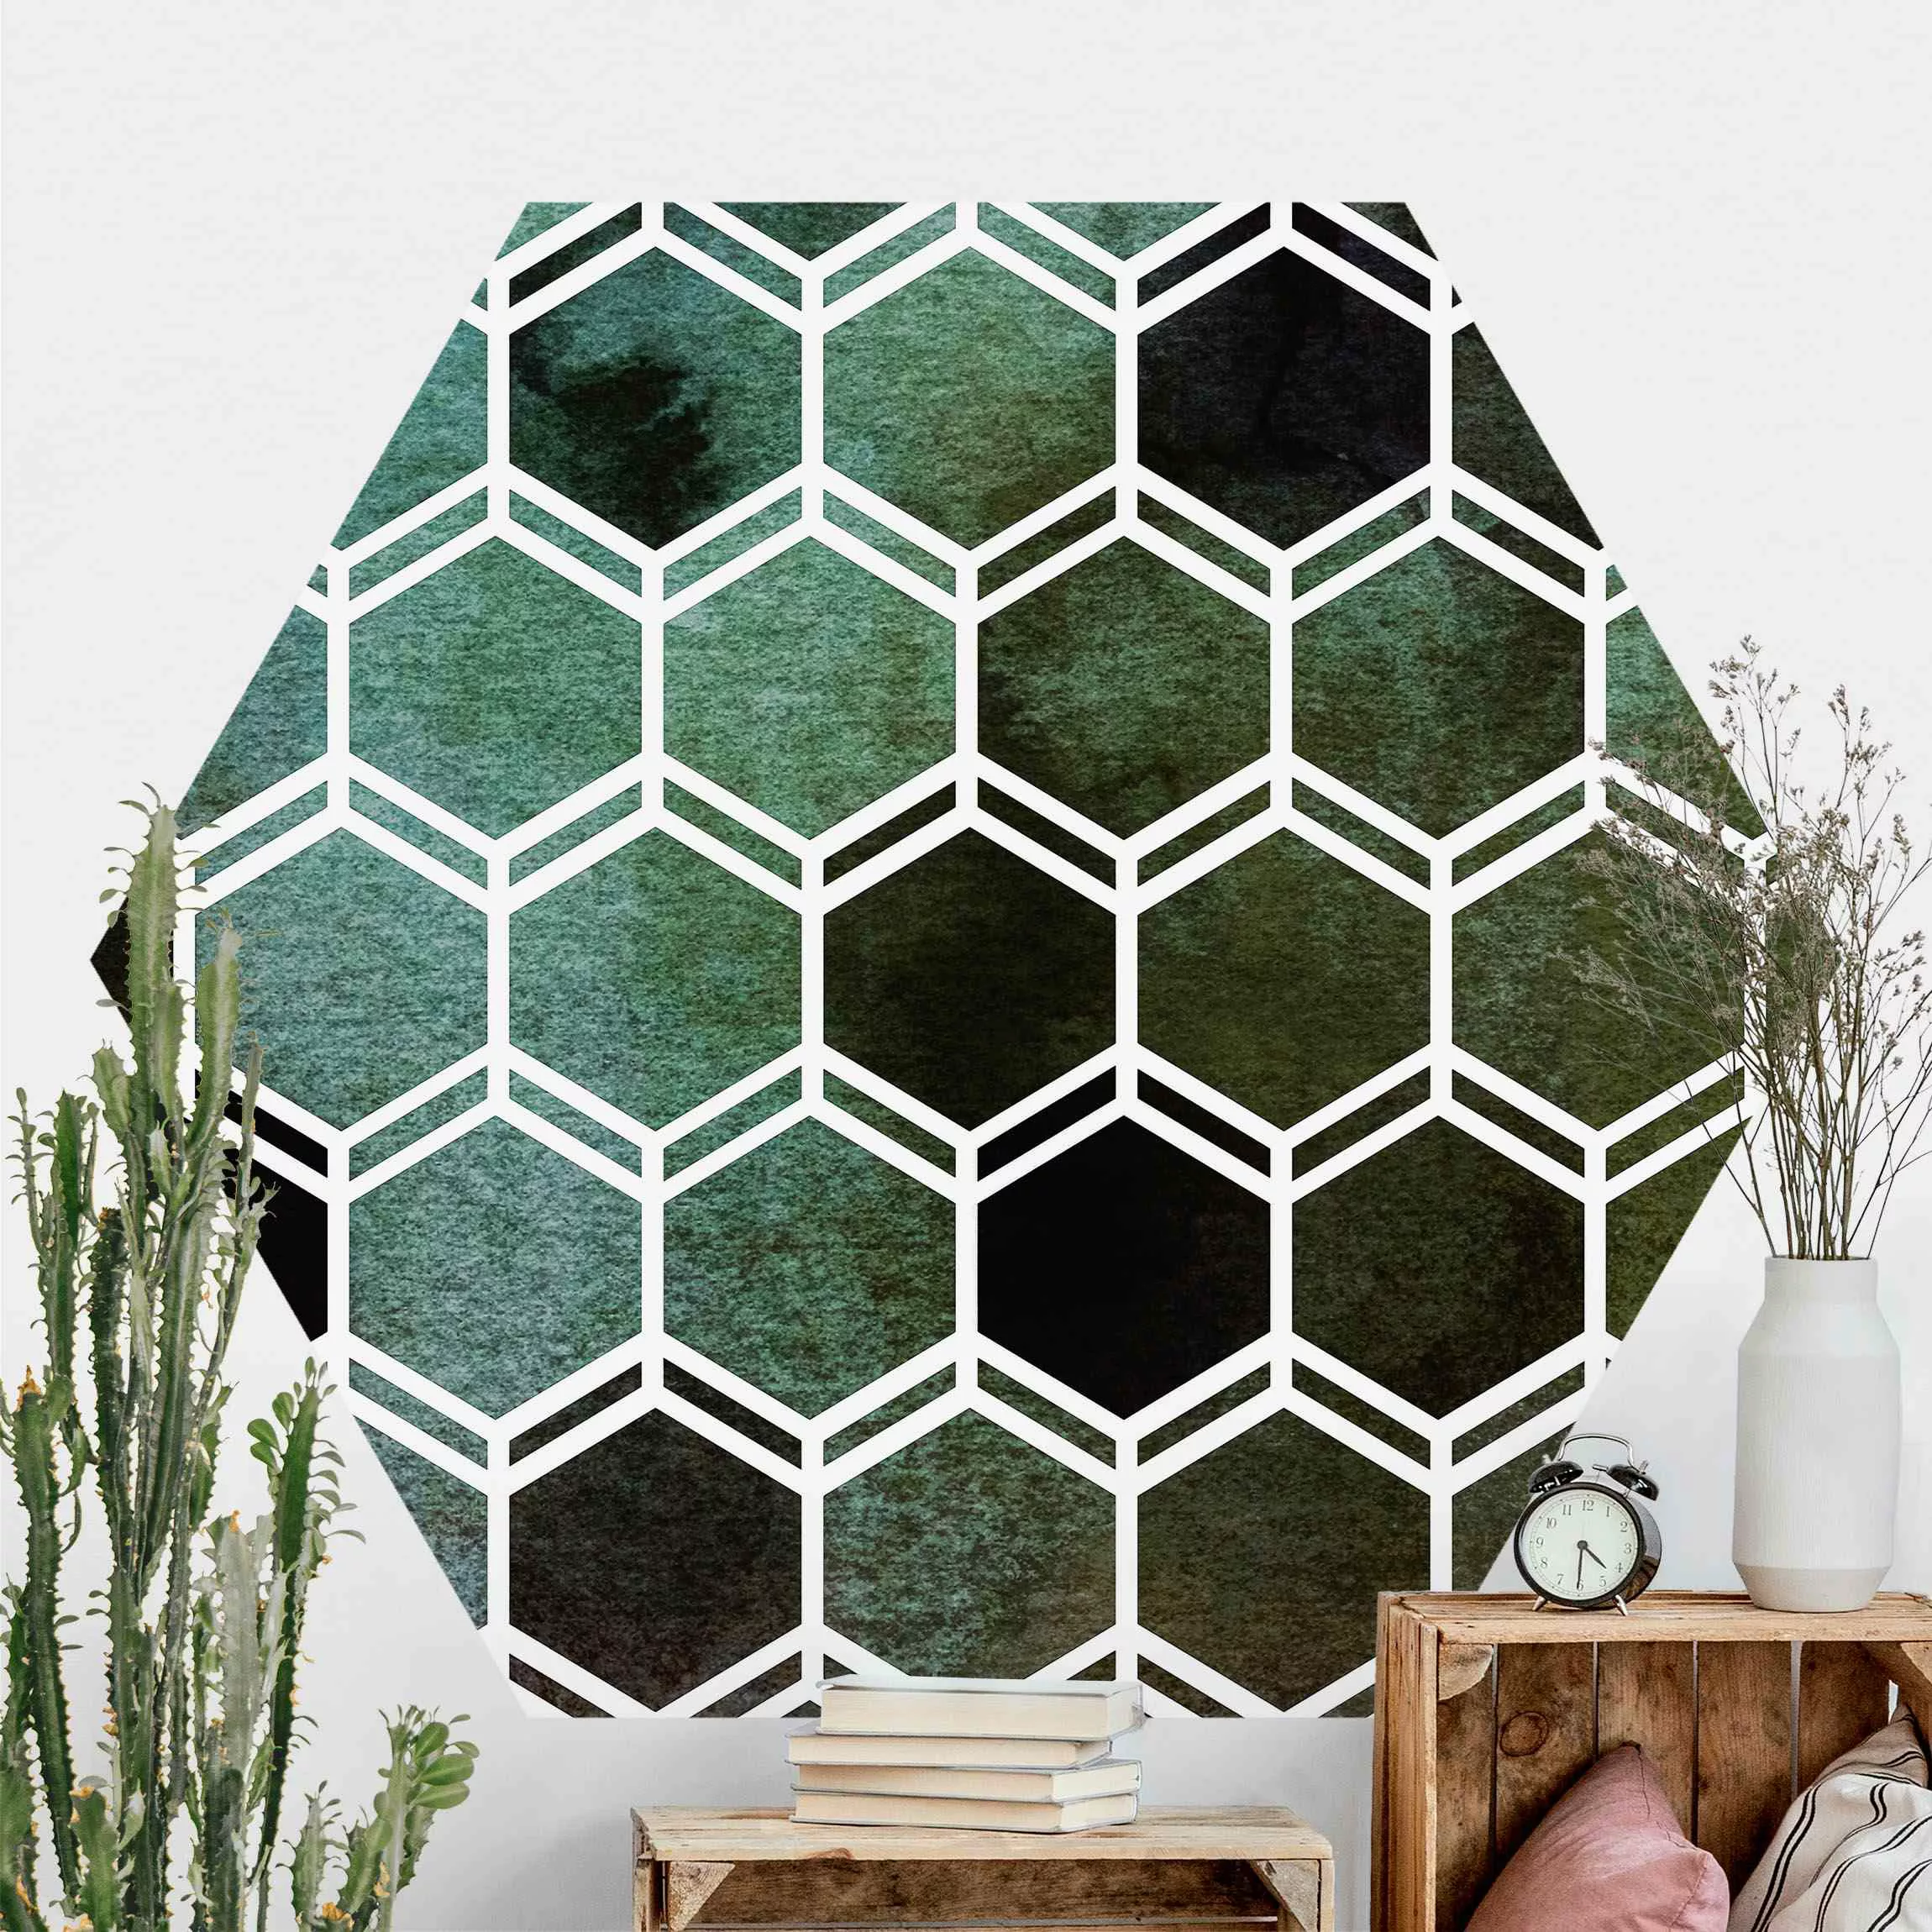 Hexagon Mustertapete selbstklebend Hexagonträume Aquarell in Grün günstig online kaufen